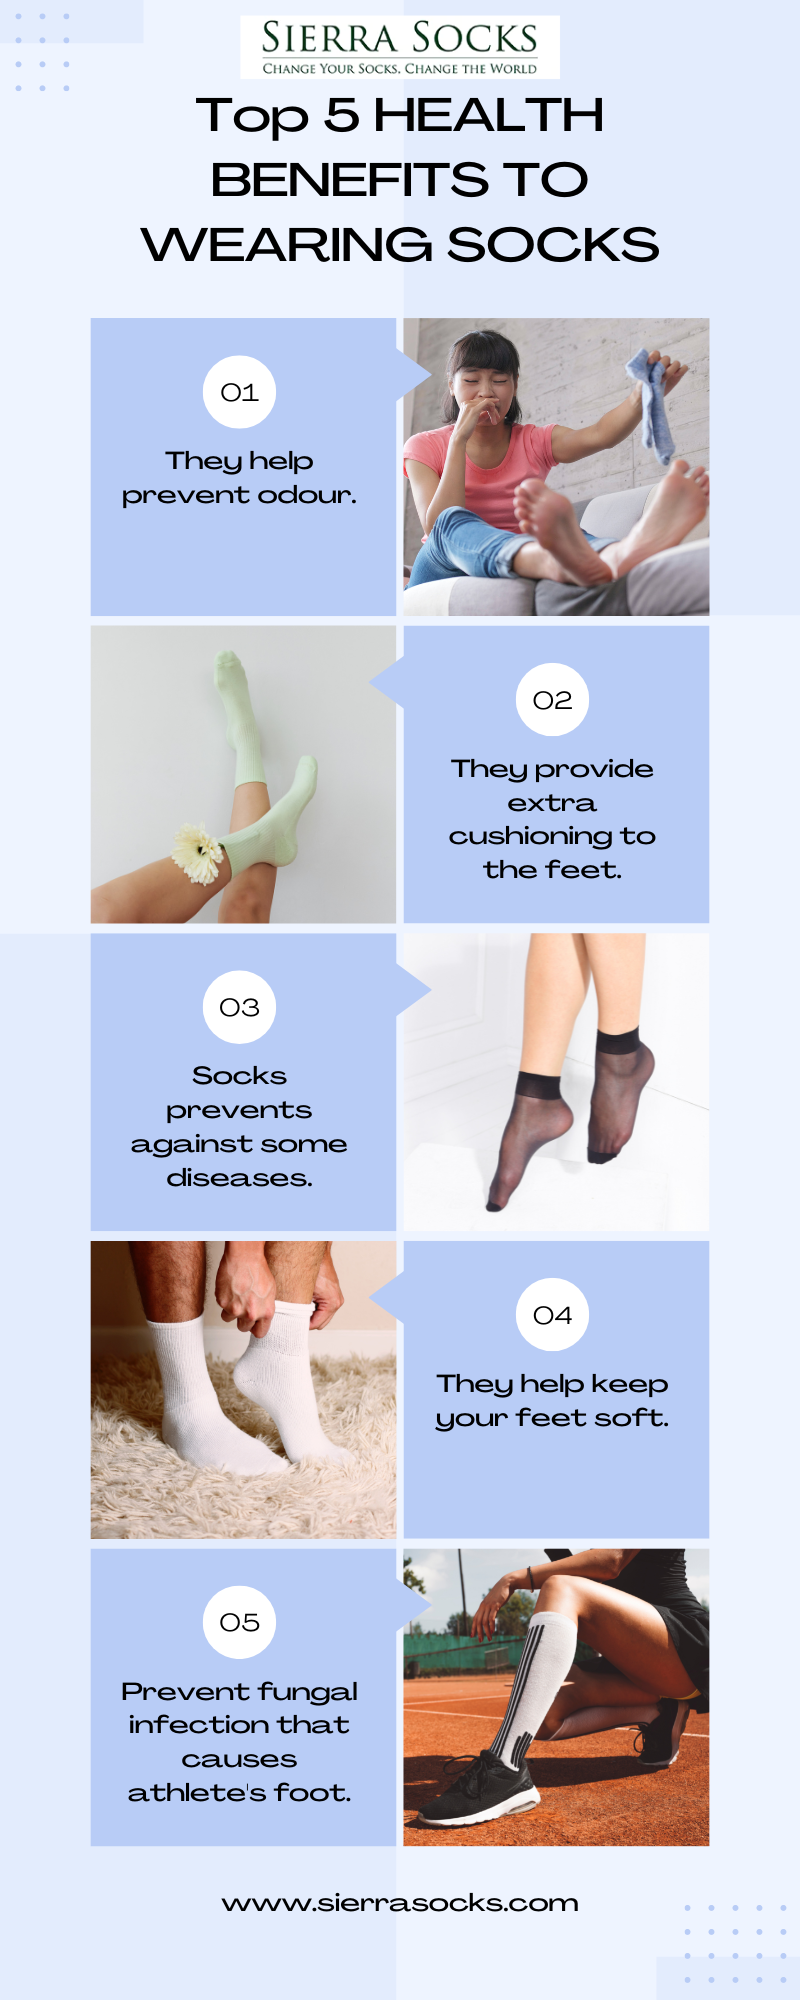 Why Wear Socks? And Benefits of wearing socks? | Sierra Socks | Visual.ly